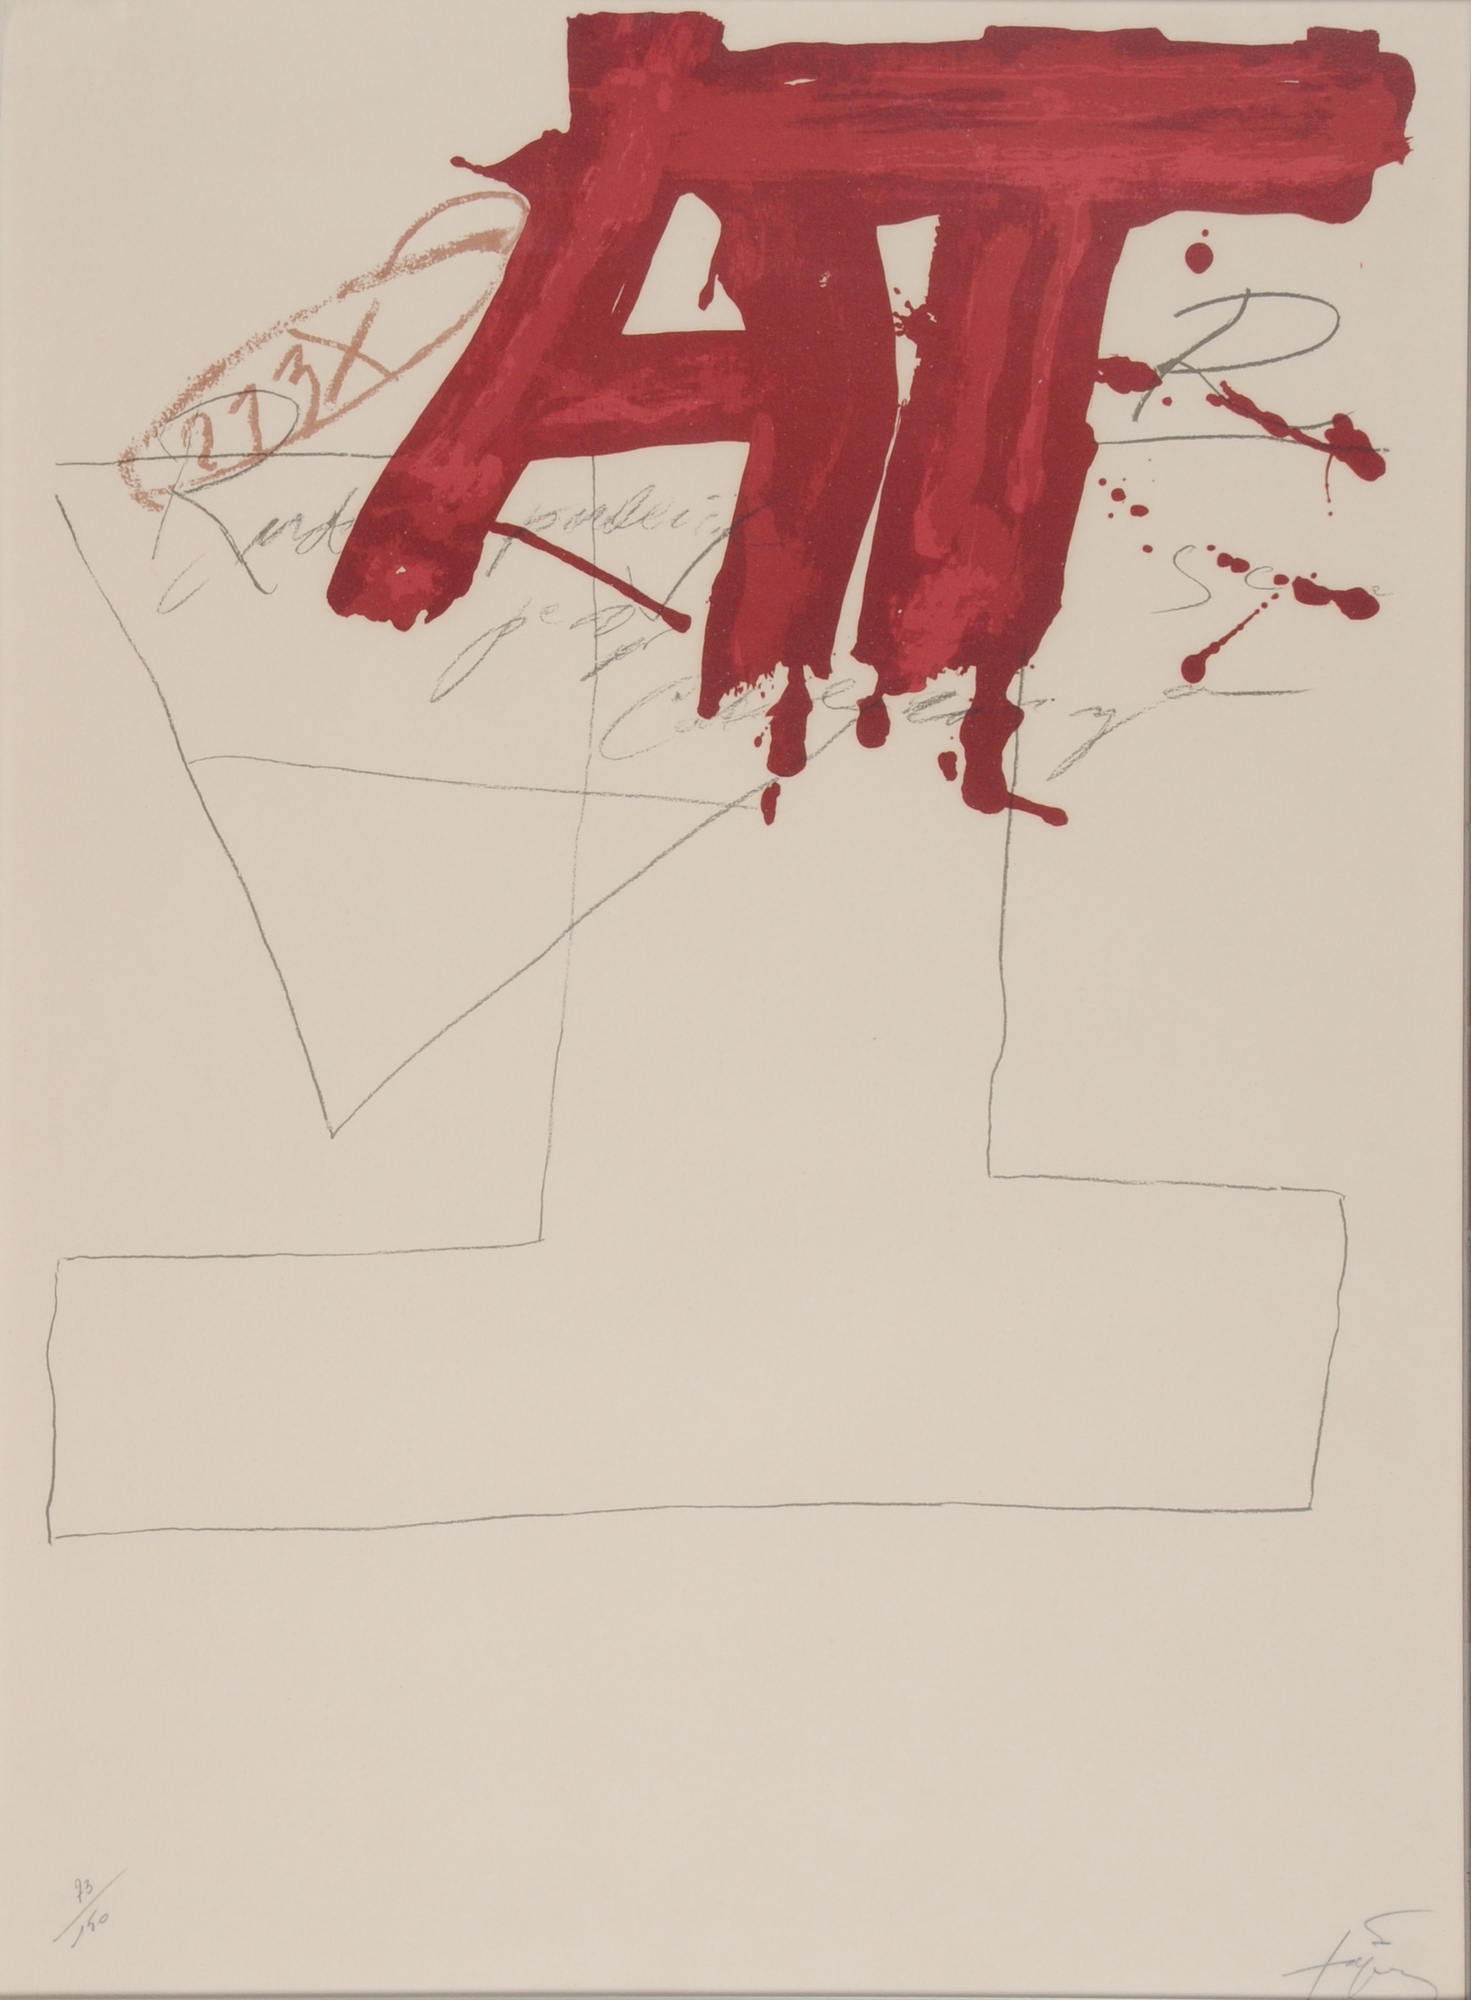 Untitled by Antoni Tàpies, 1976